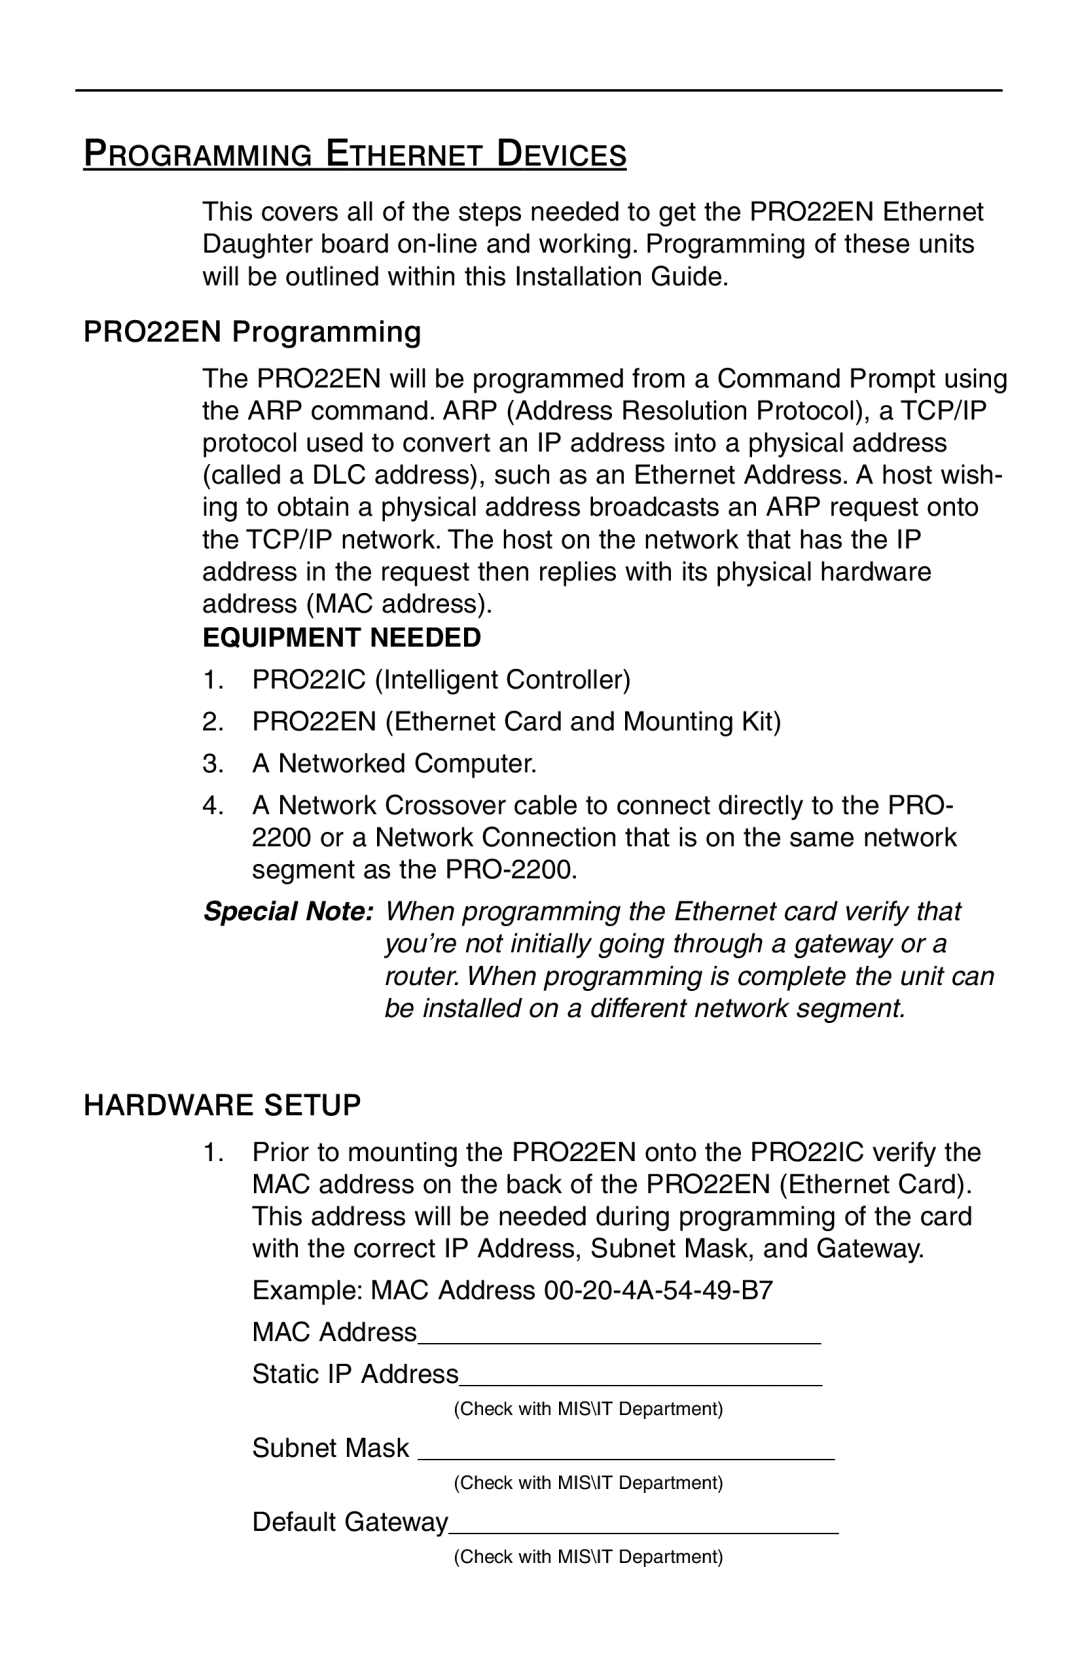 Honeywell PRO-2200 manual Programming Ethernet Devices, PRO22EN Programming, Hardware Setup, Equipment Needed 